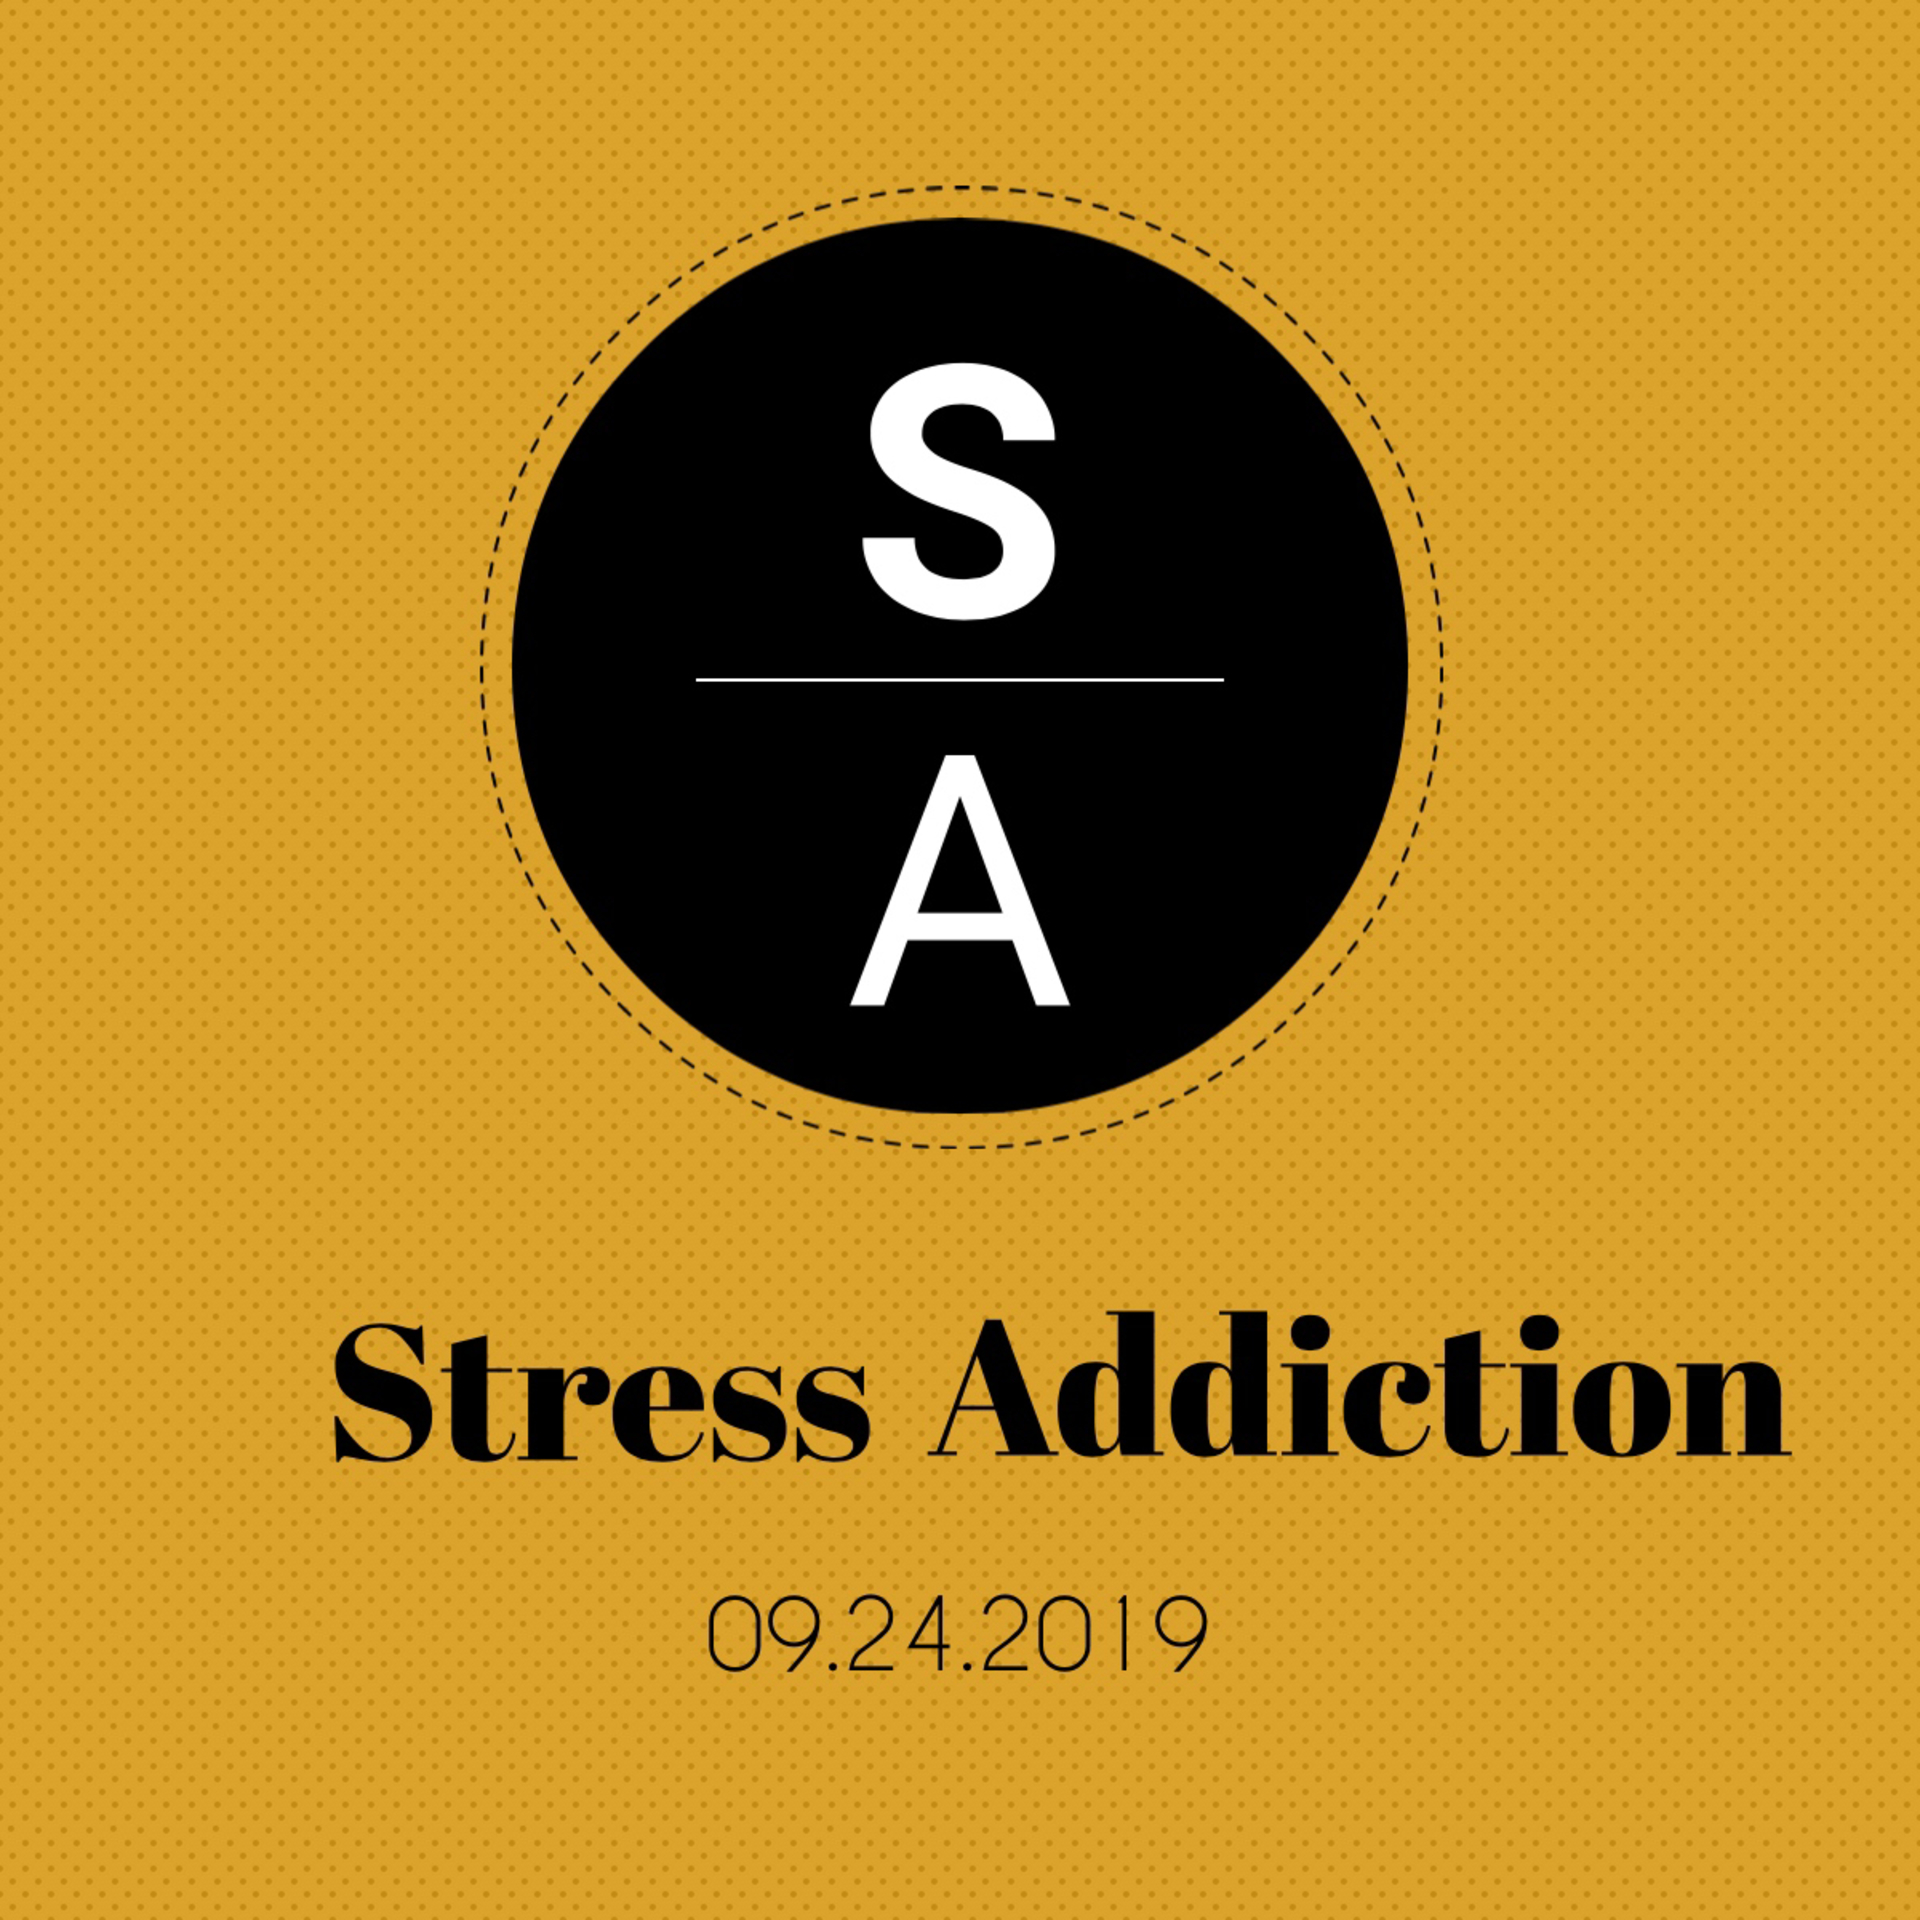 Stress as an addiction image